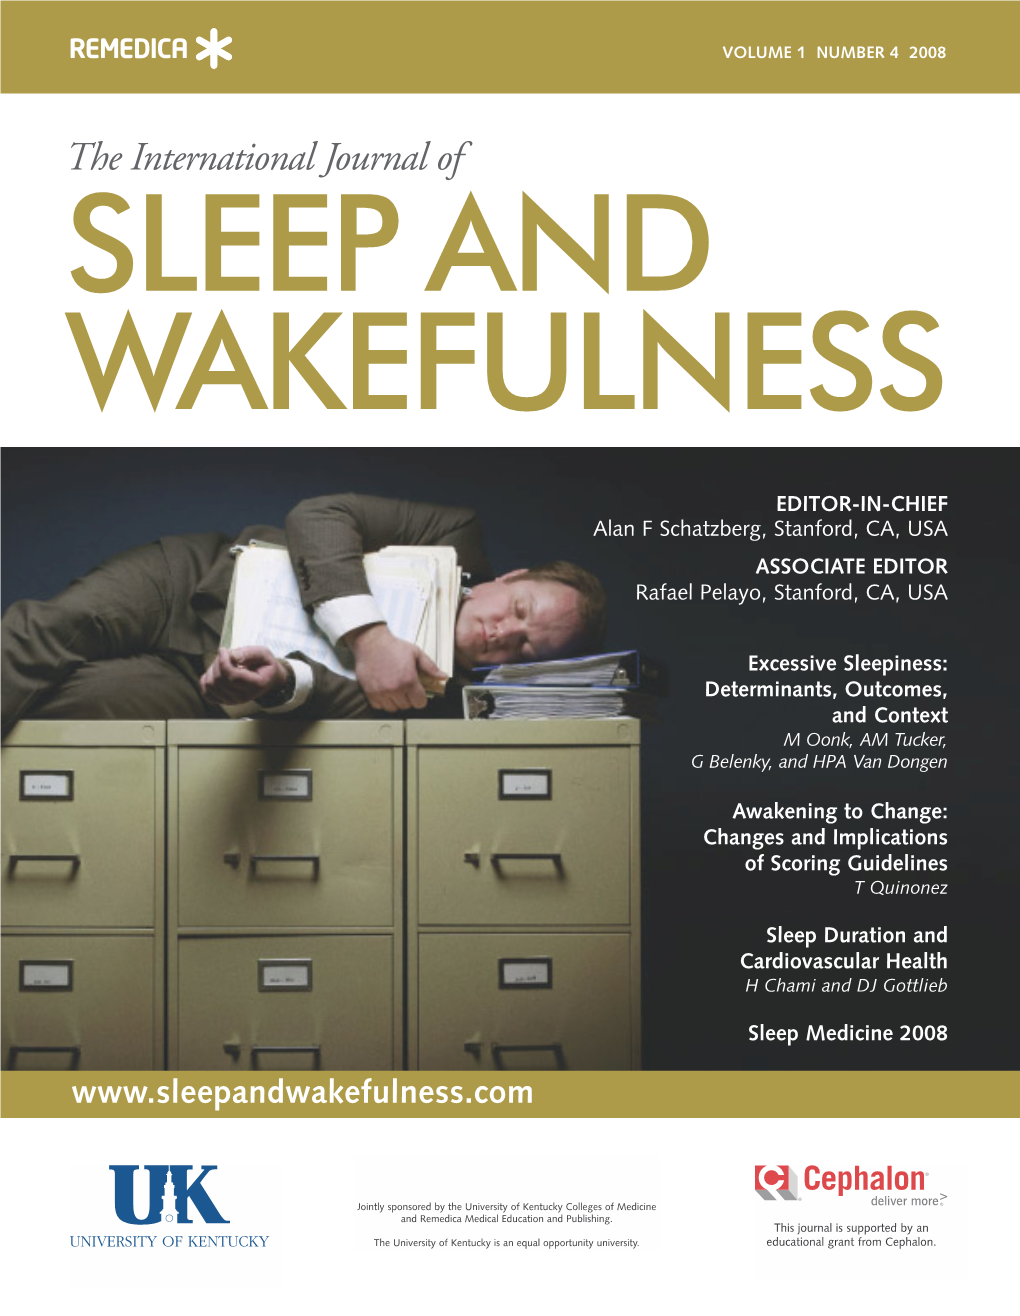 The International Journal of SLEEP and WAKEFULNESS